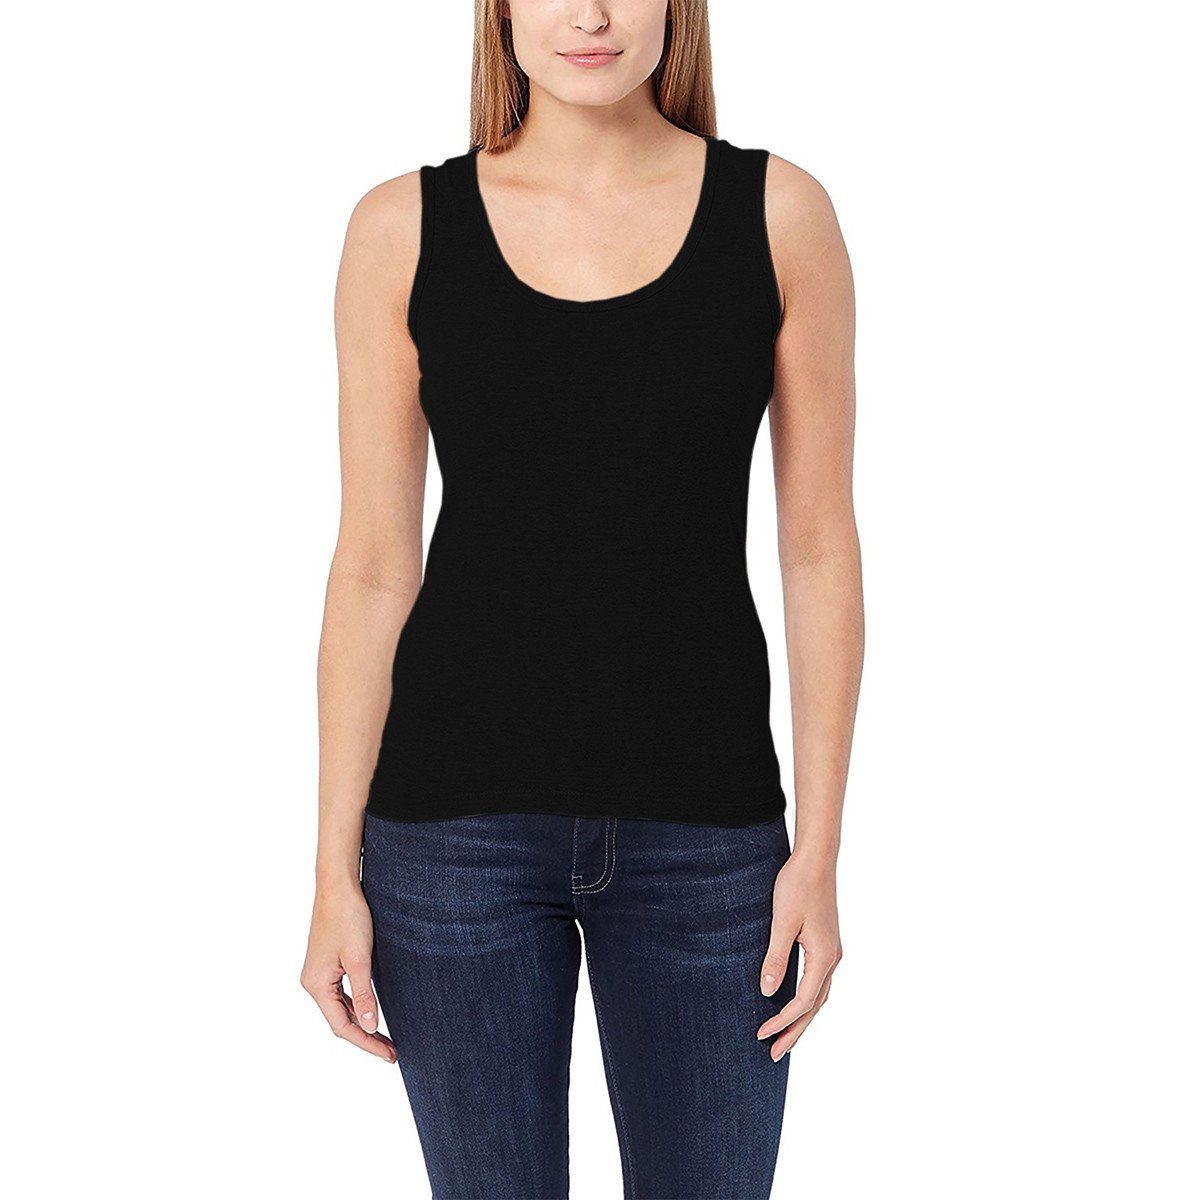 BYD Cropi Vest Women's Tee Shirt Image Black XS 